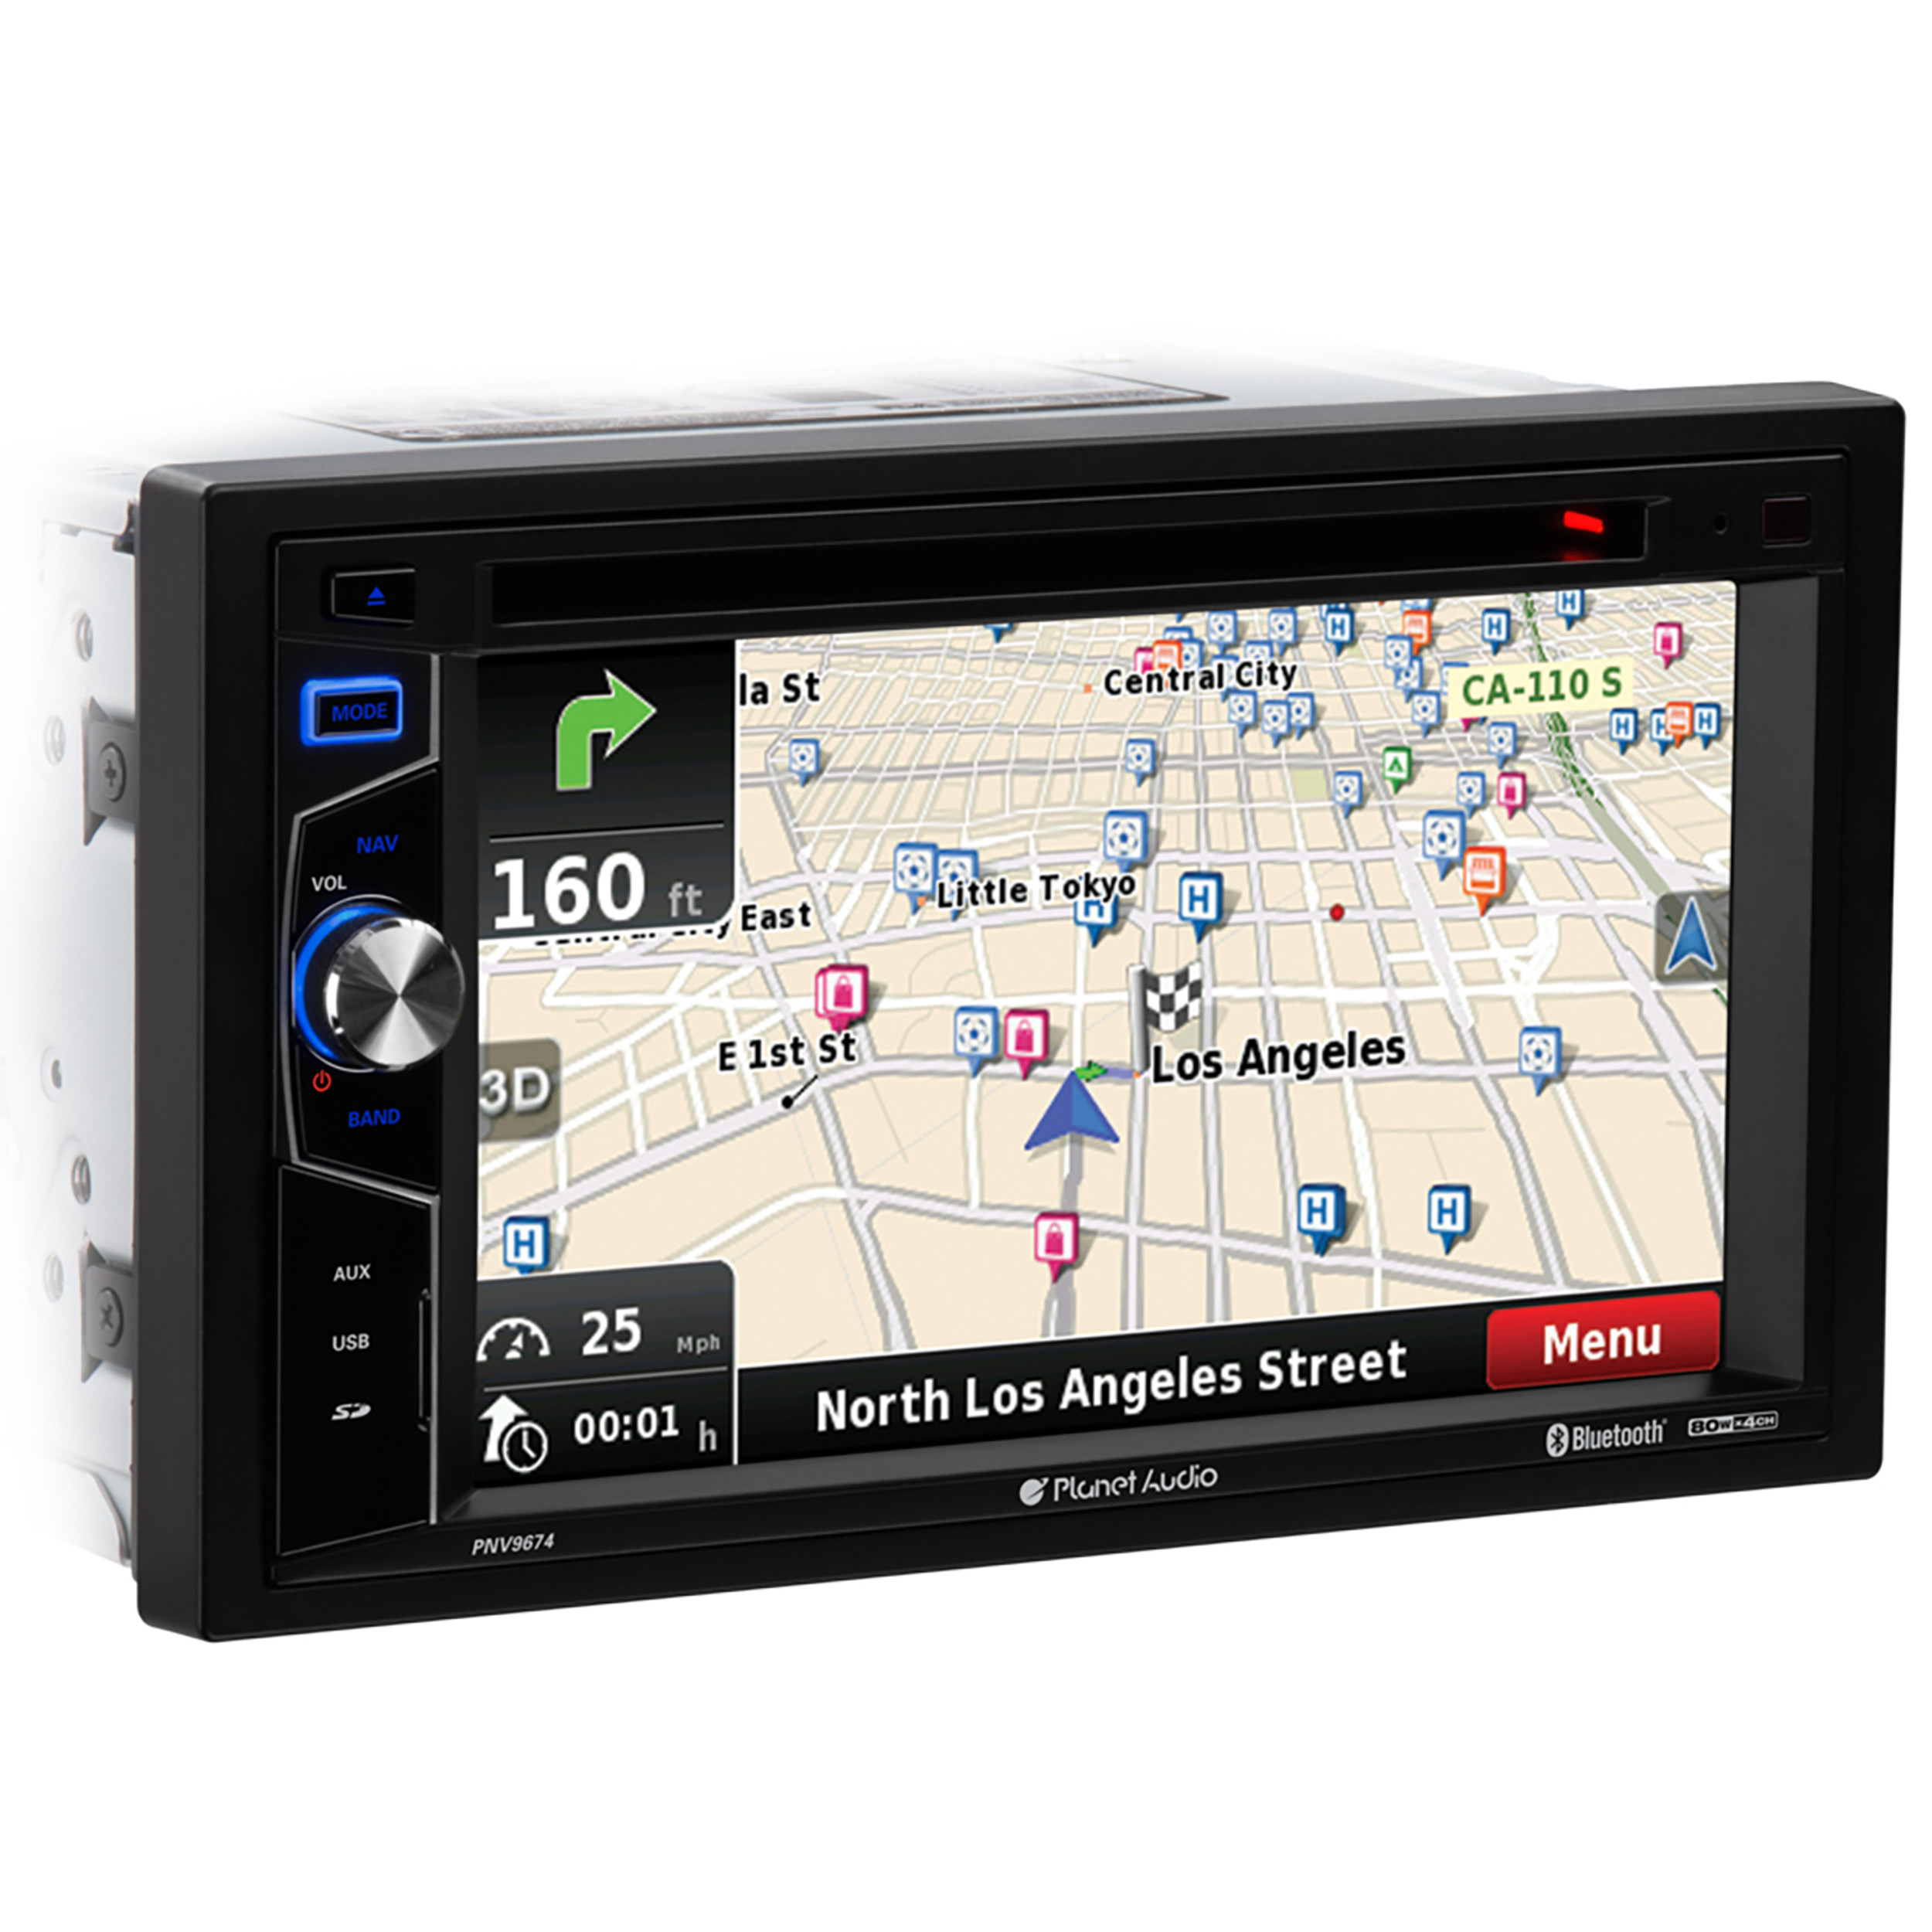 Planet Audio PNV9674 Car 6.2” Touchscreen Bluetooth Navigation, DVD USB SD AM/FM - image 6 of 9